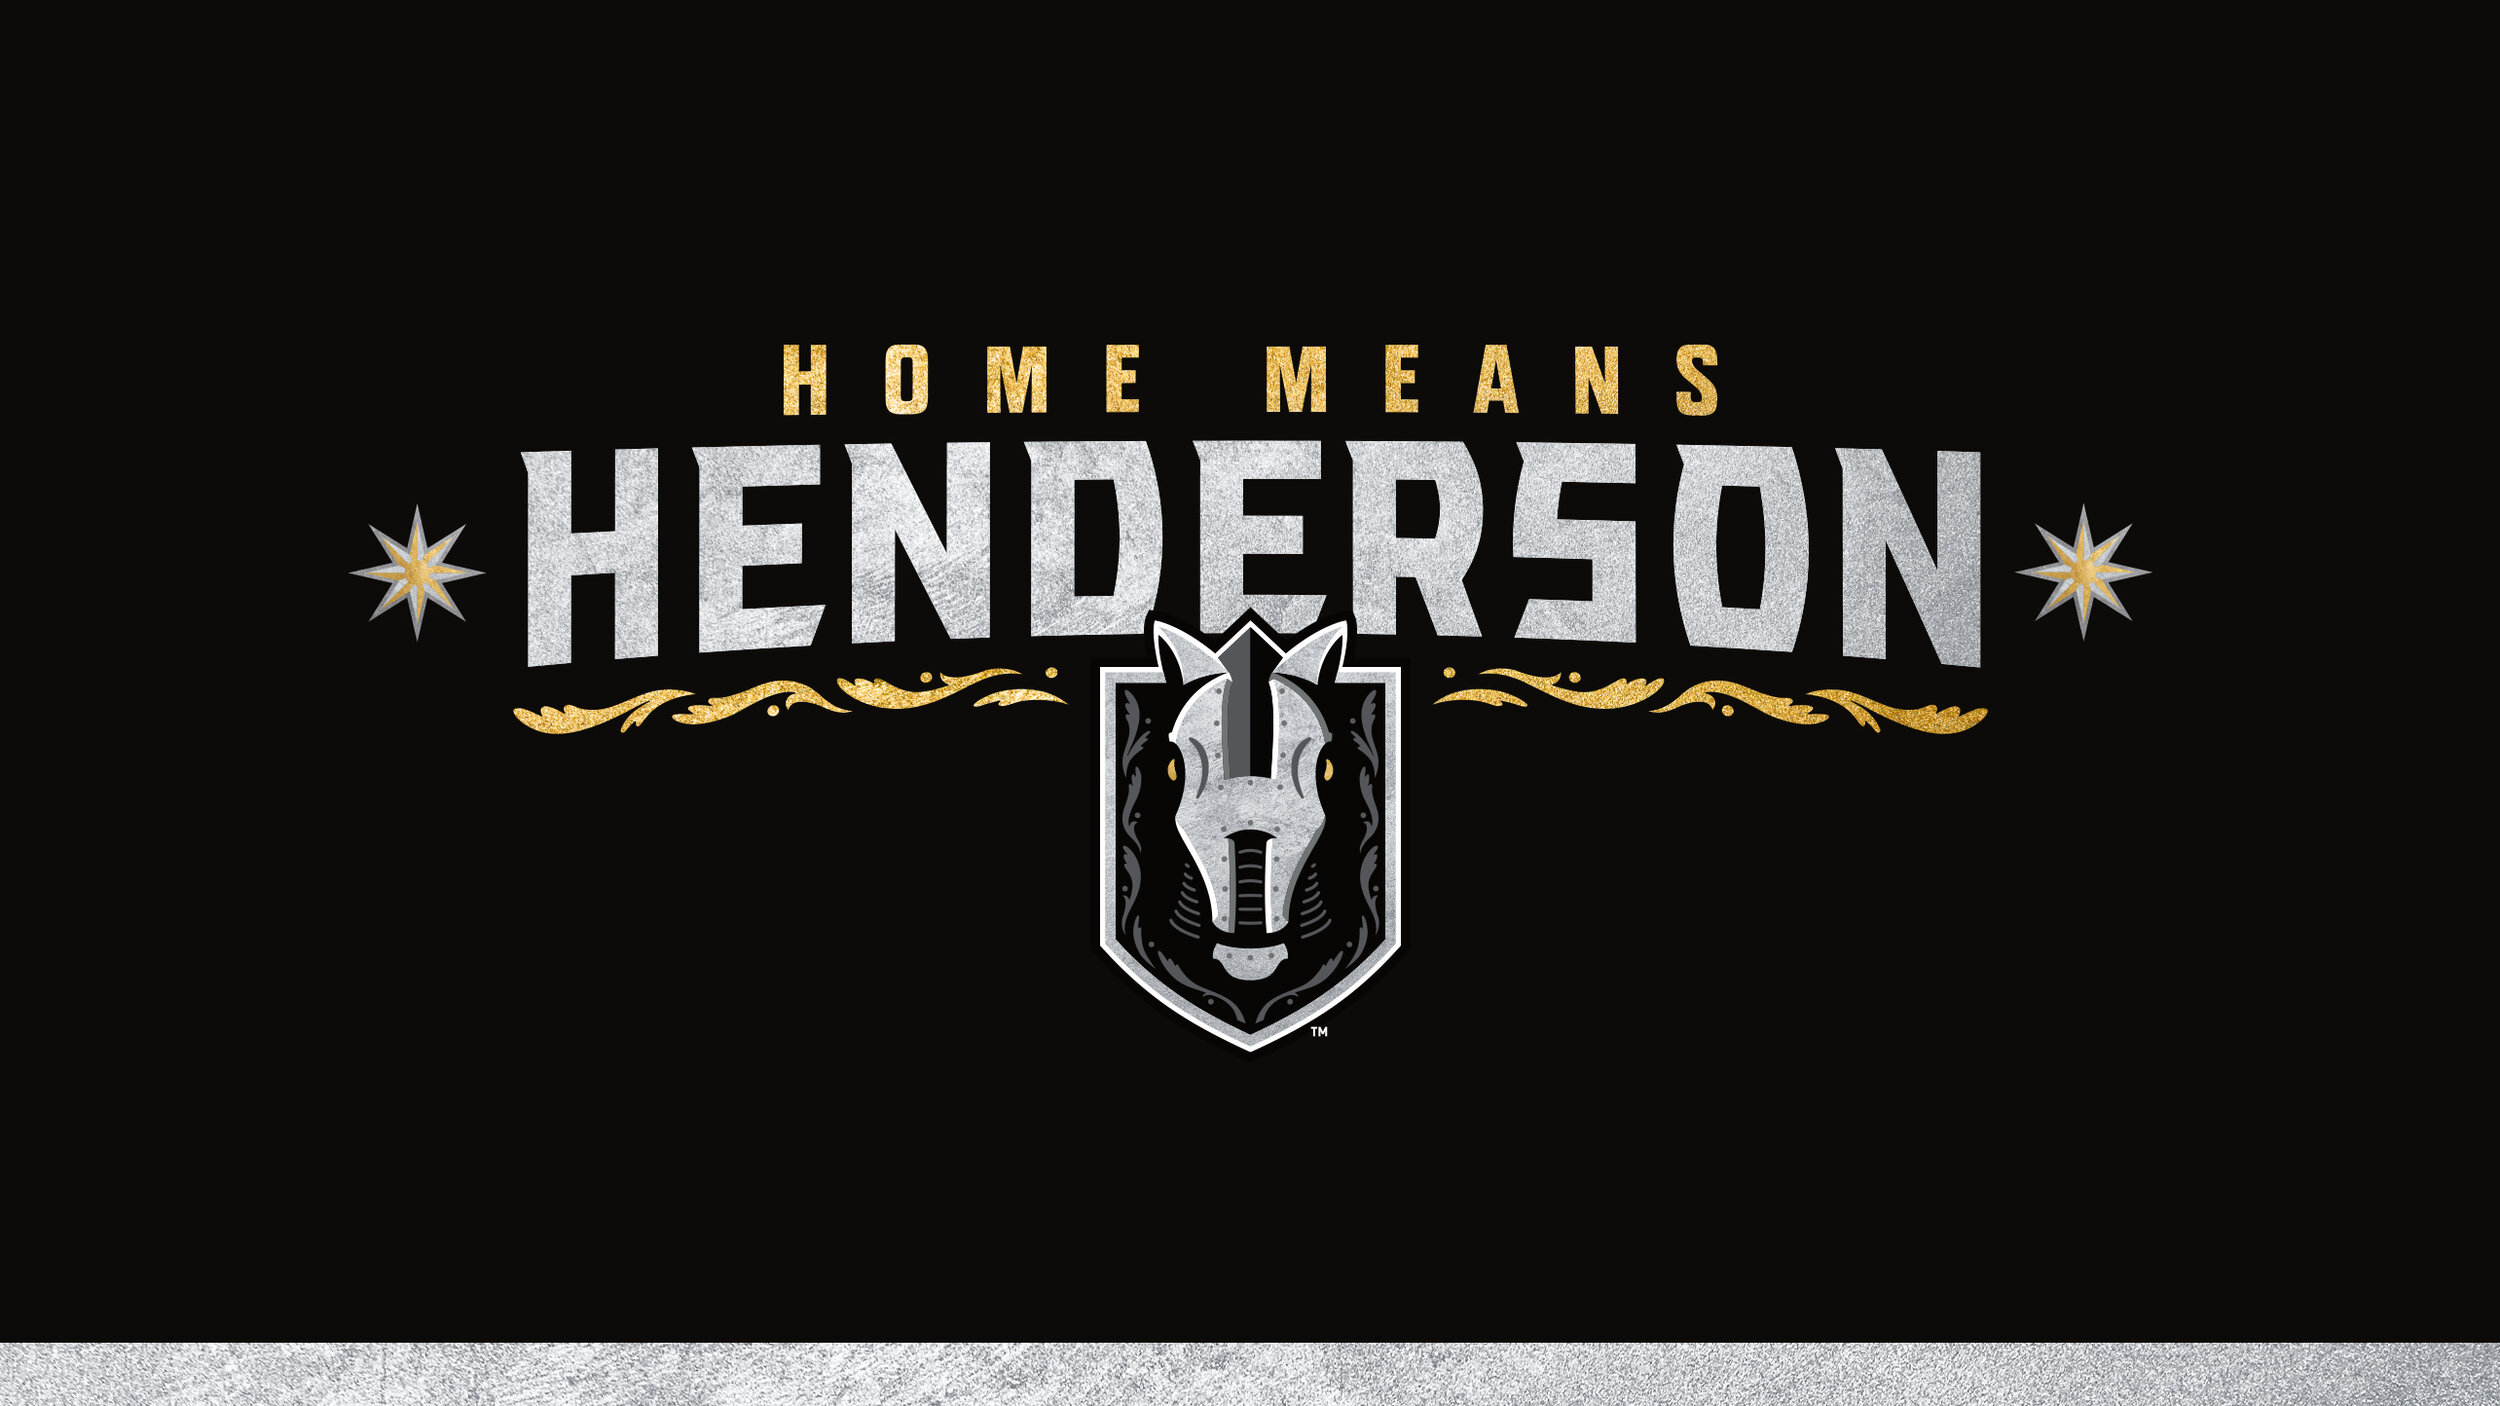 Henderson Silver Knights unveil first jersey